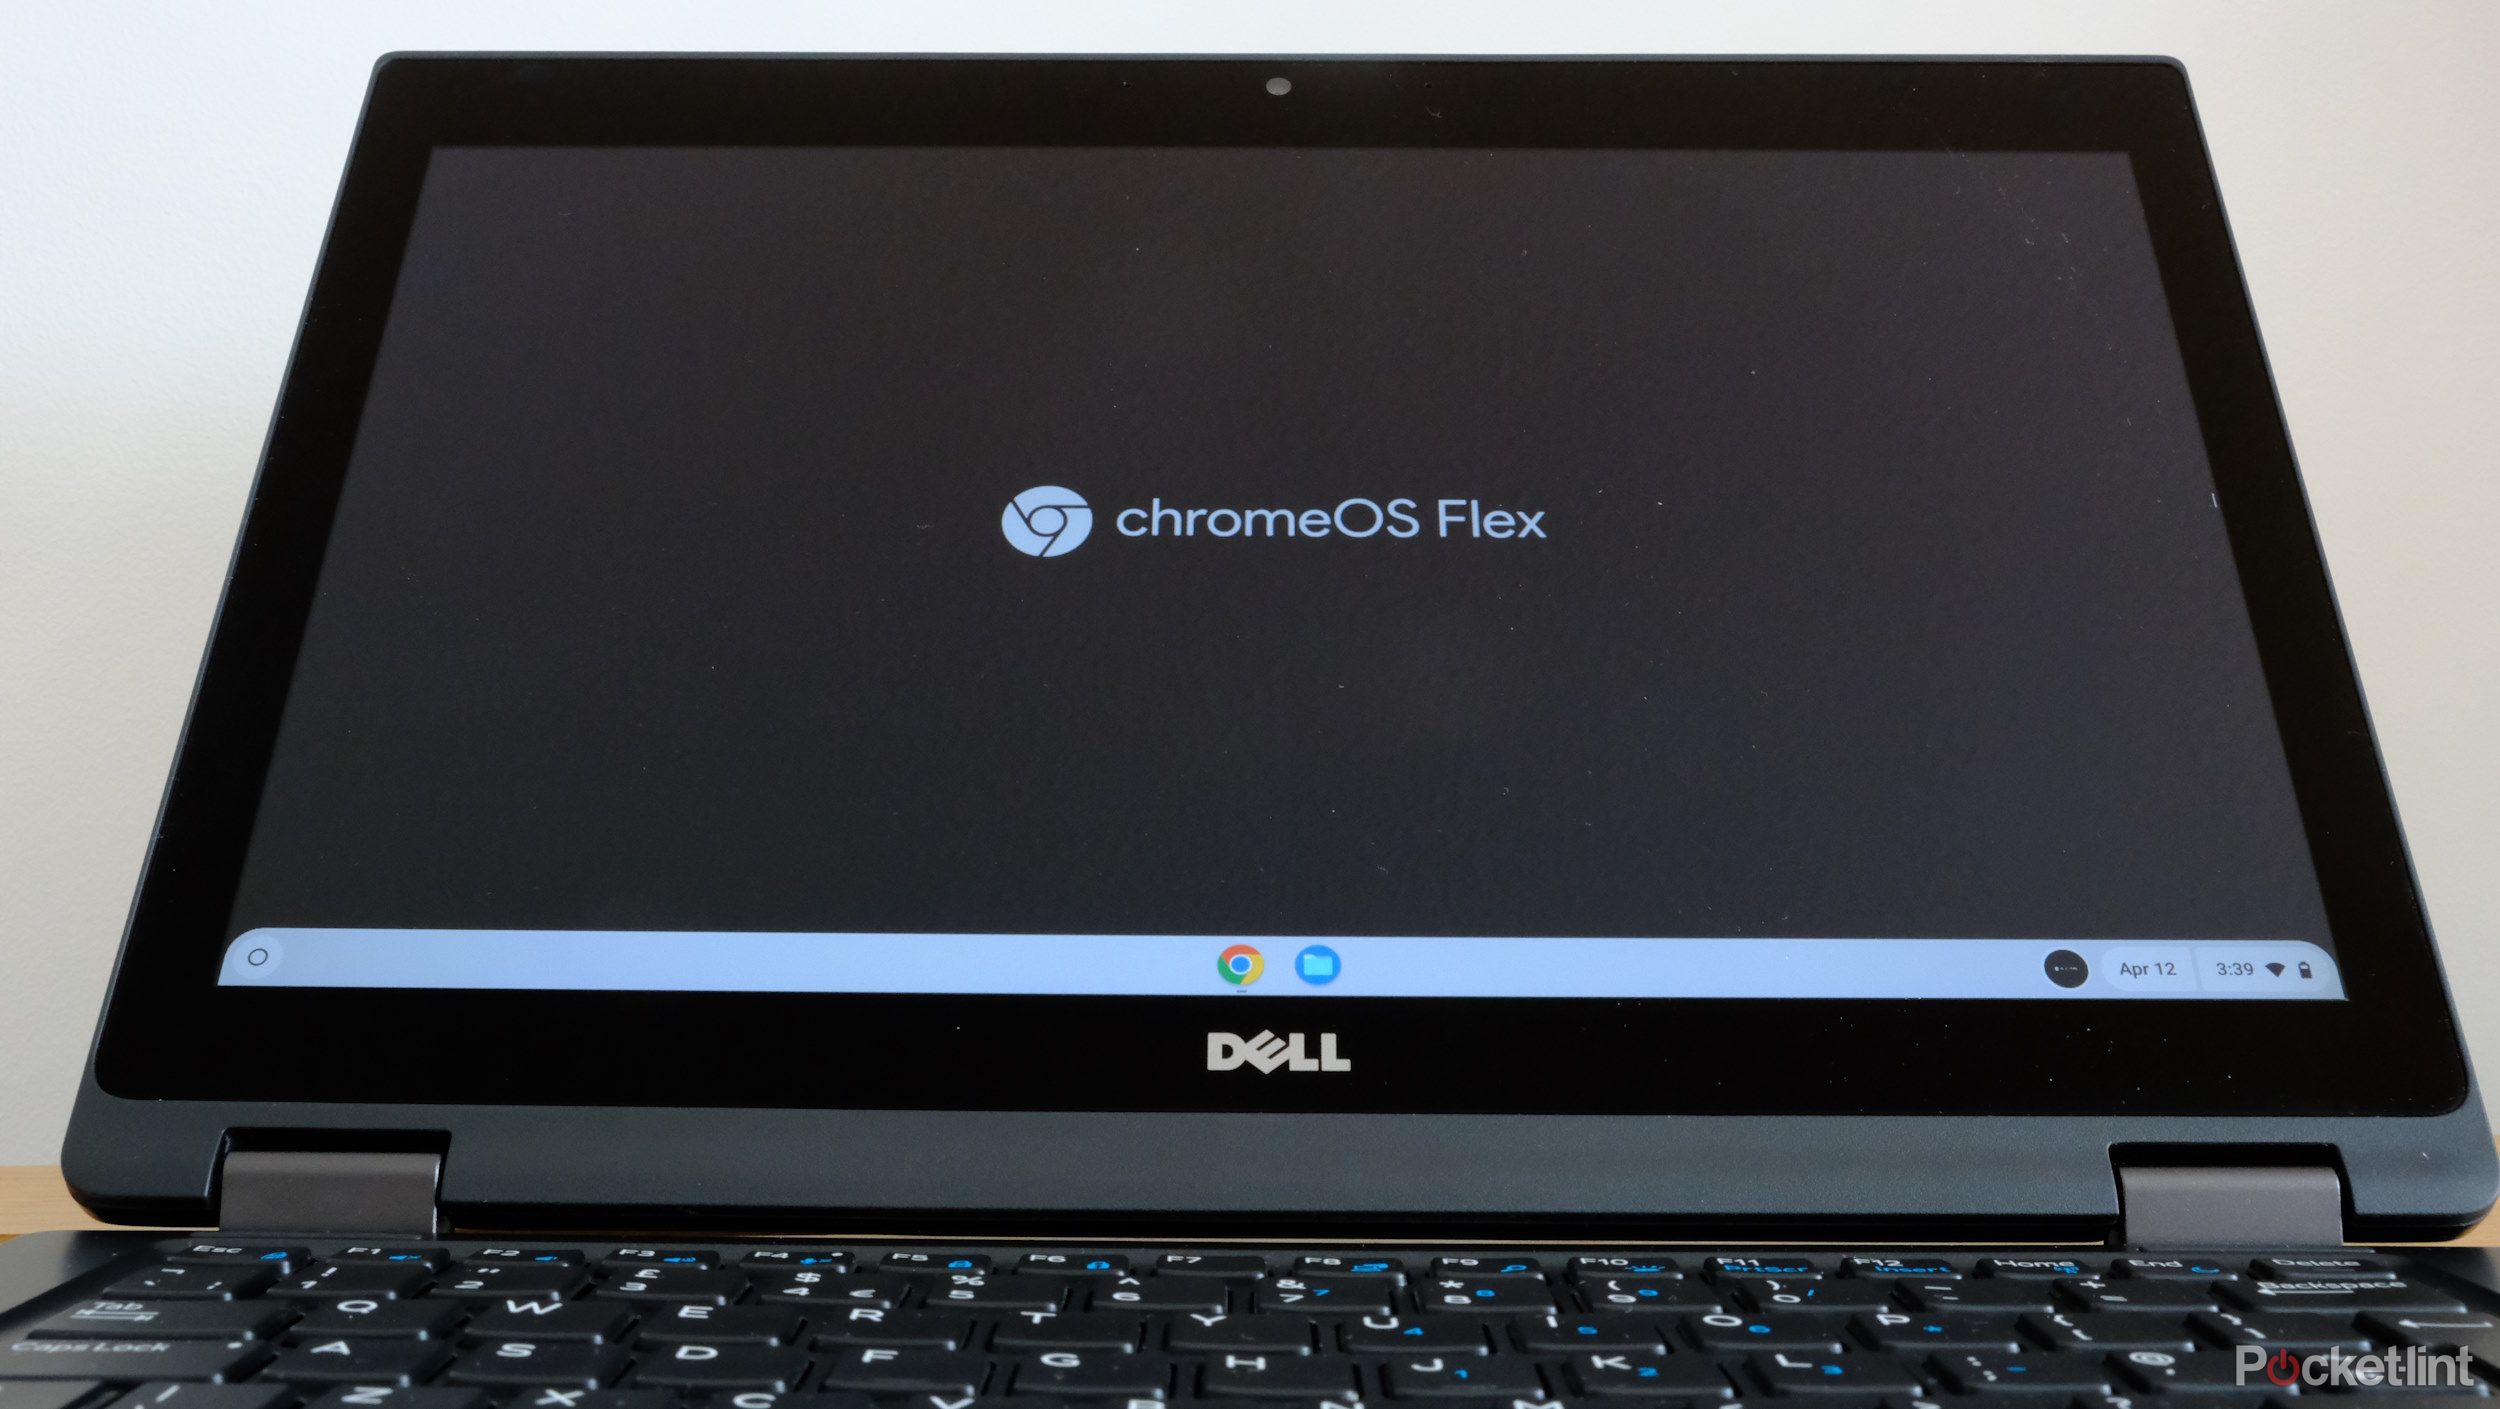 Installing Google's ChromeOS Flex